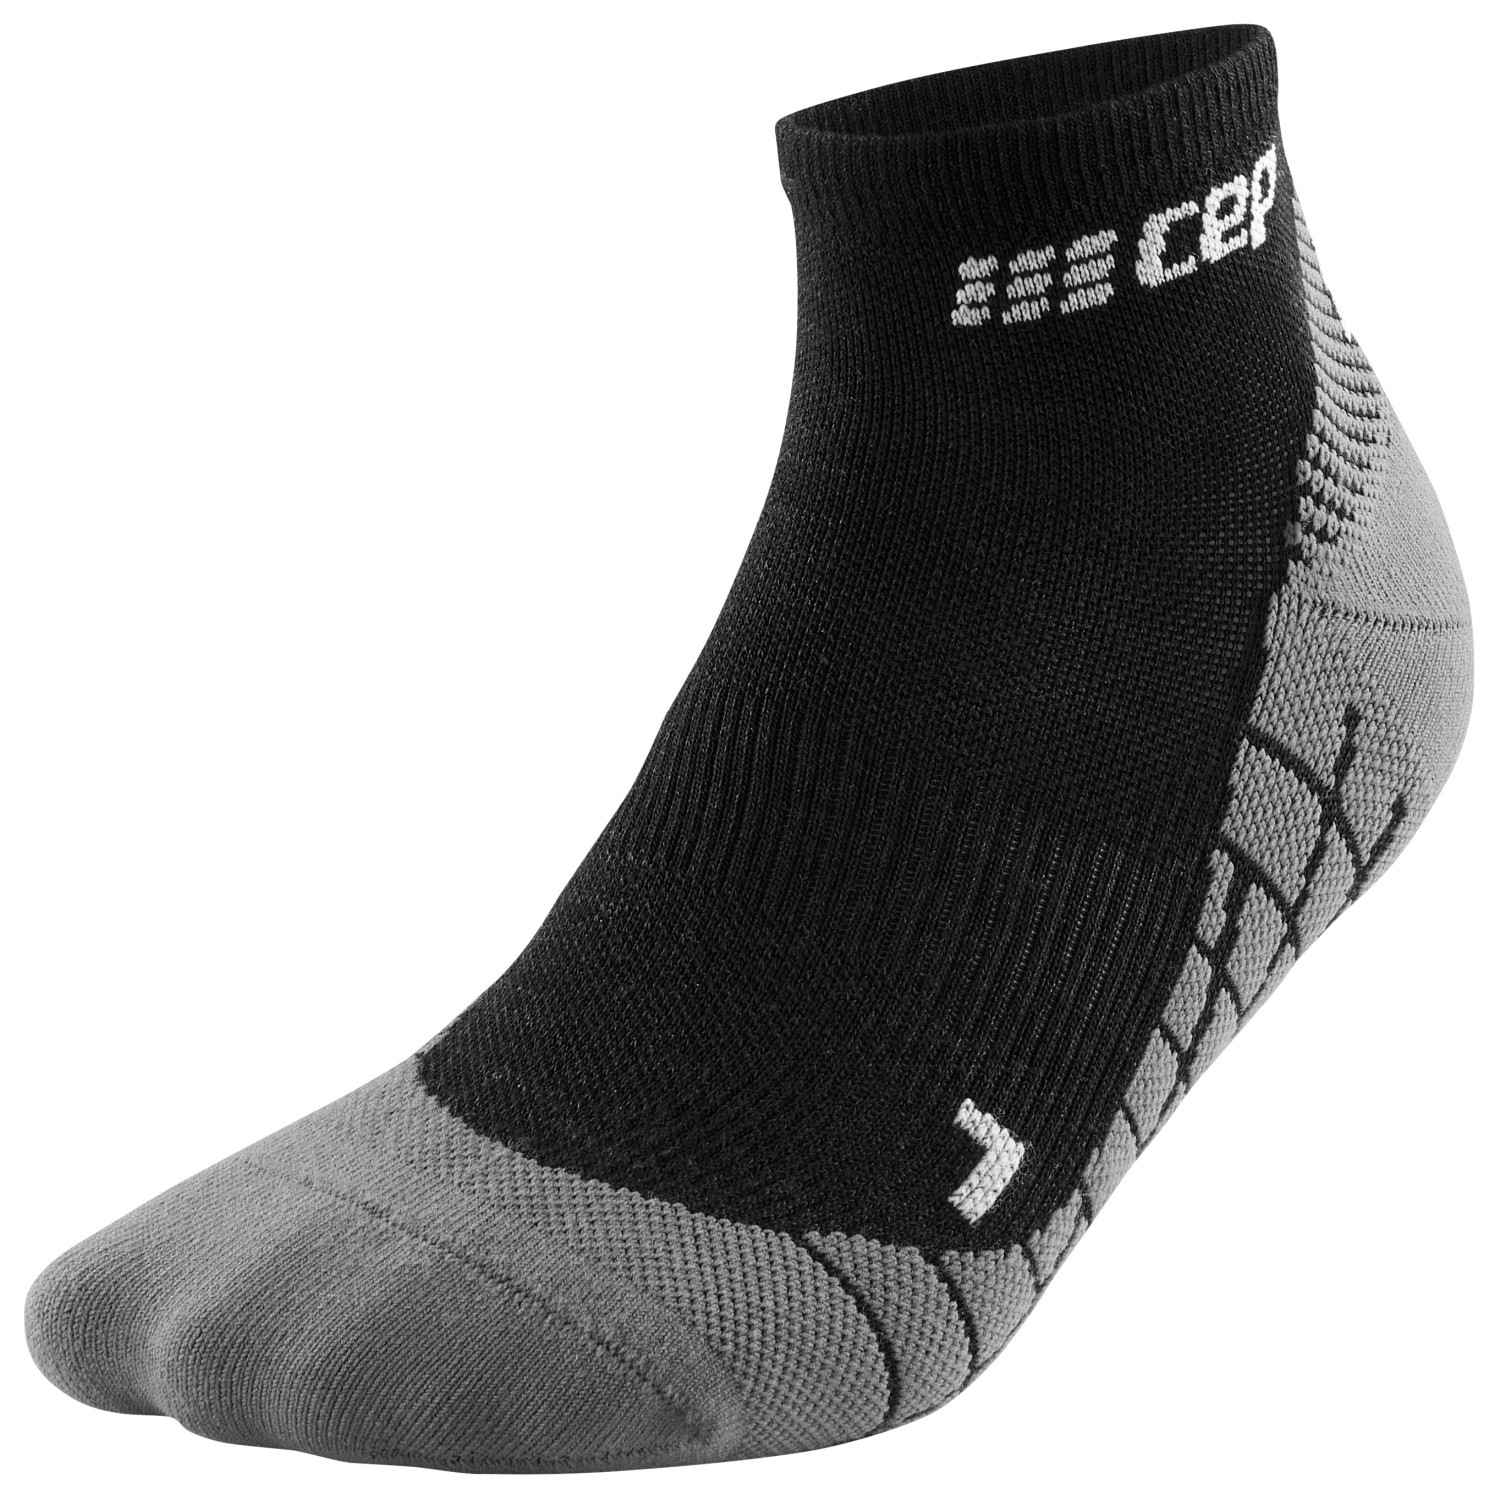 Походные носки Cep Women's Cep Light Merino Socks Hiking Low Cut V3, черный